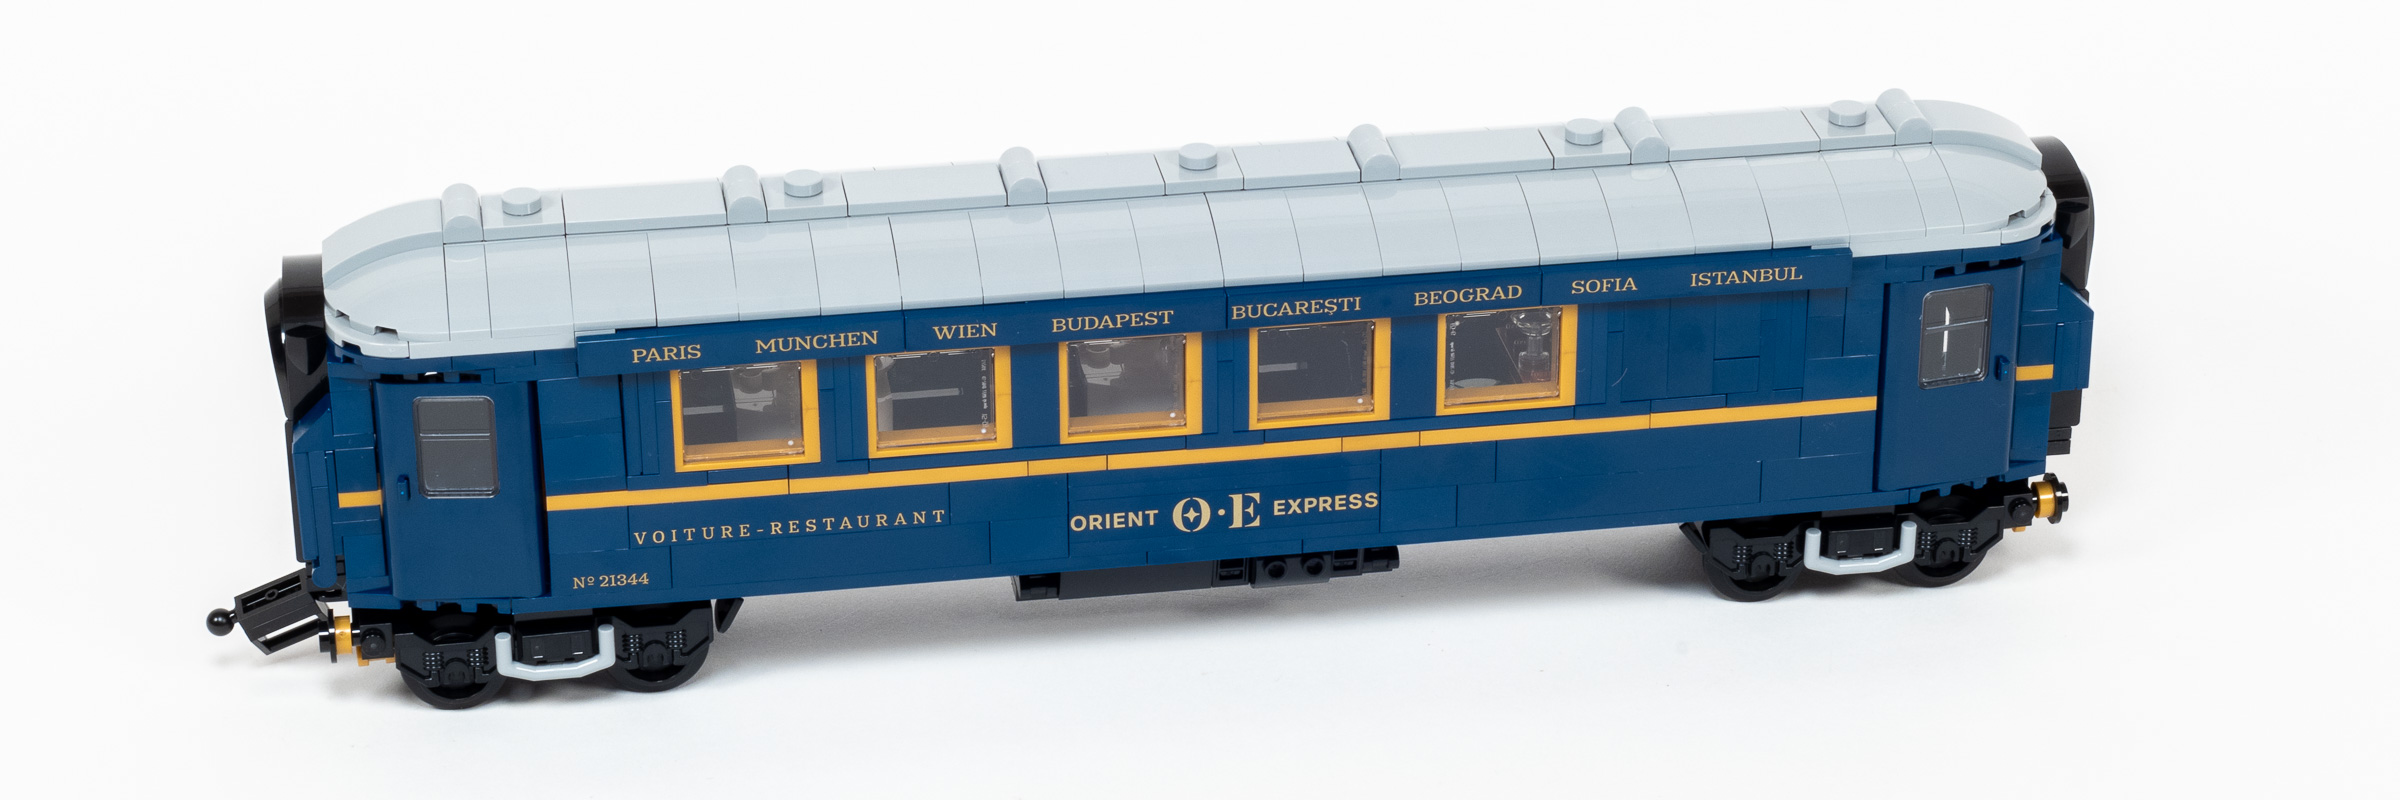 Review LEGO Ideas 21344 The Orient Express Train - HelloBricks